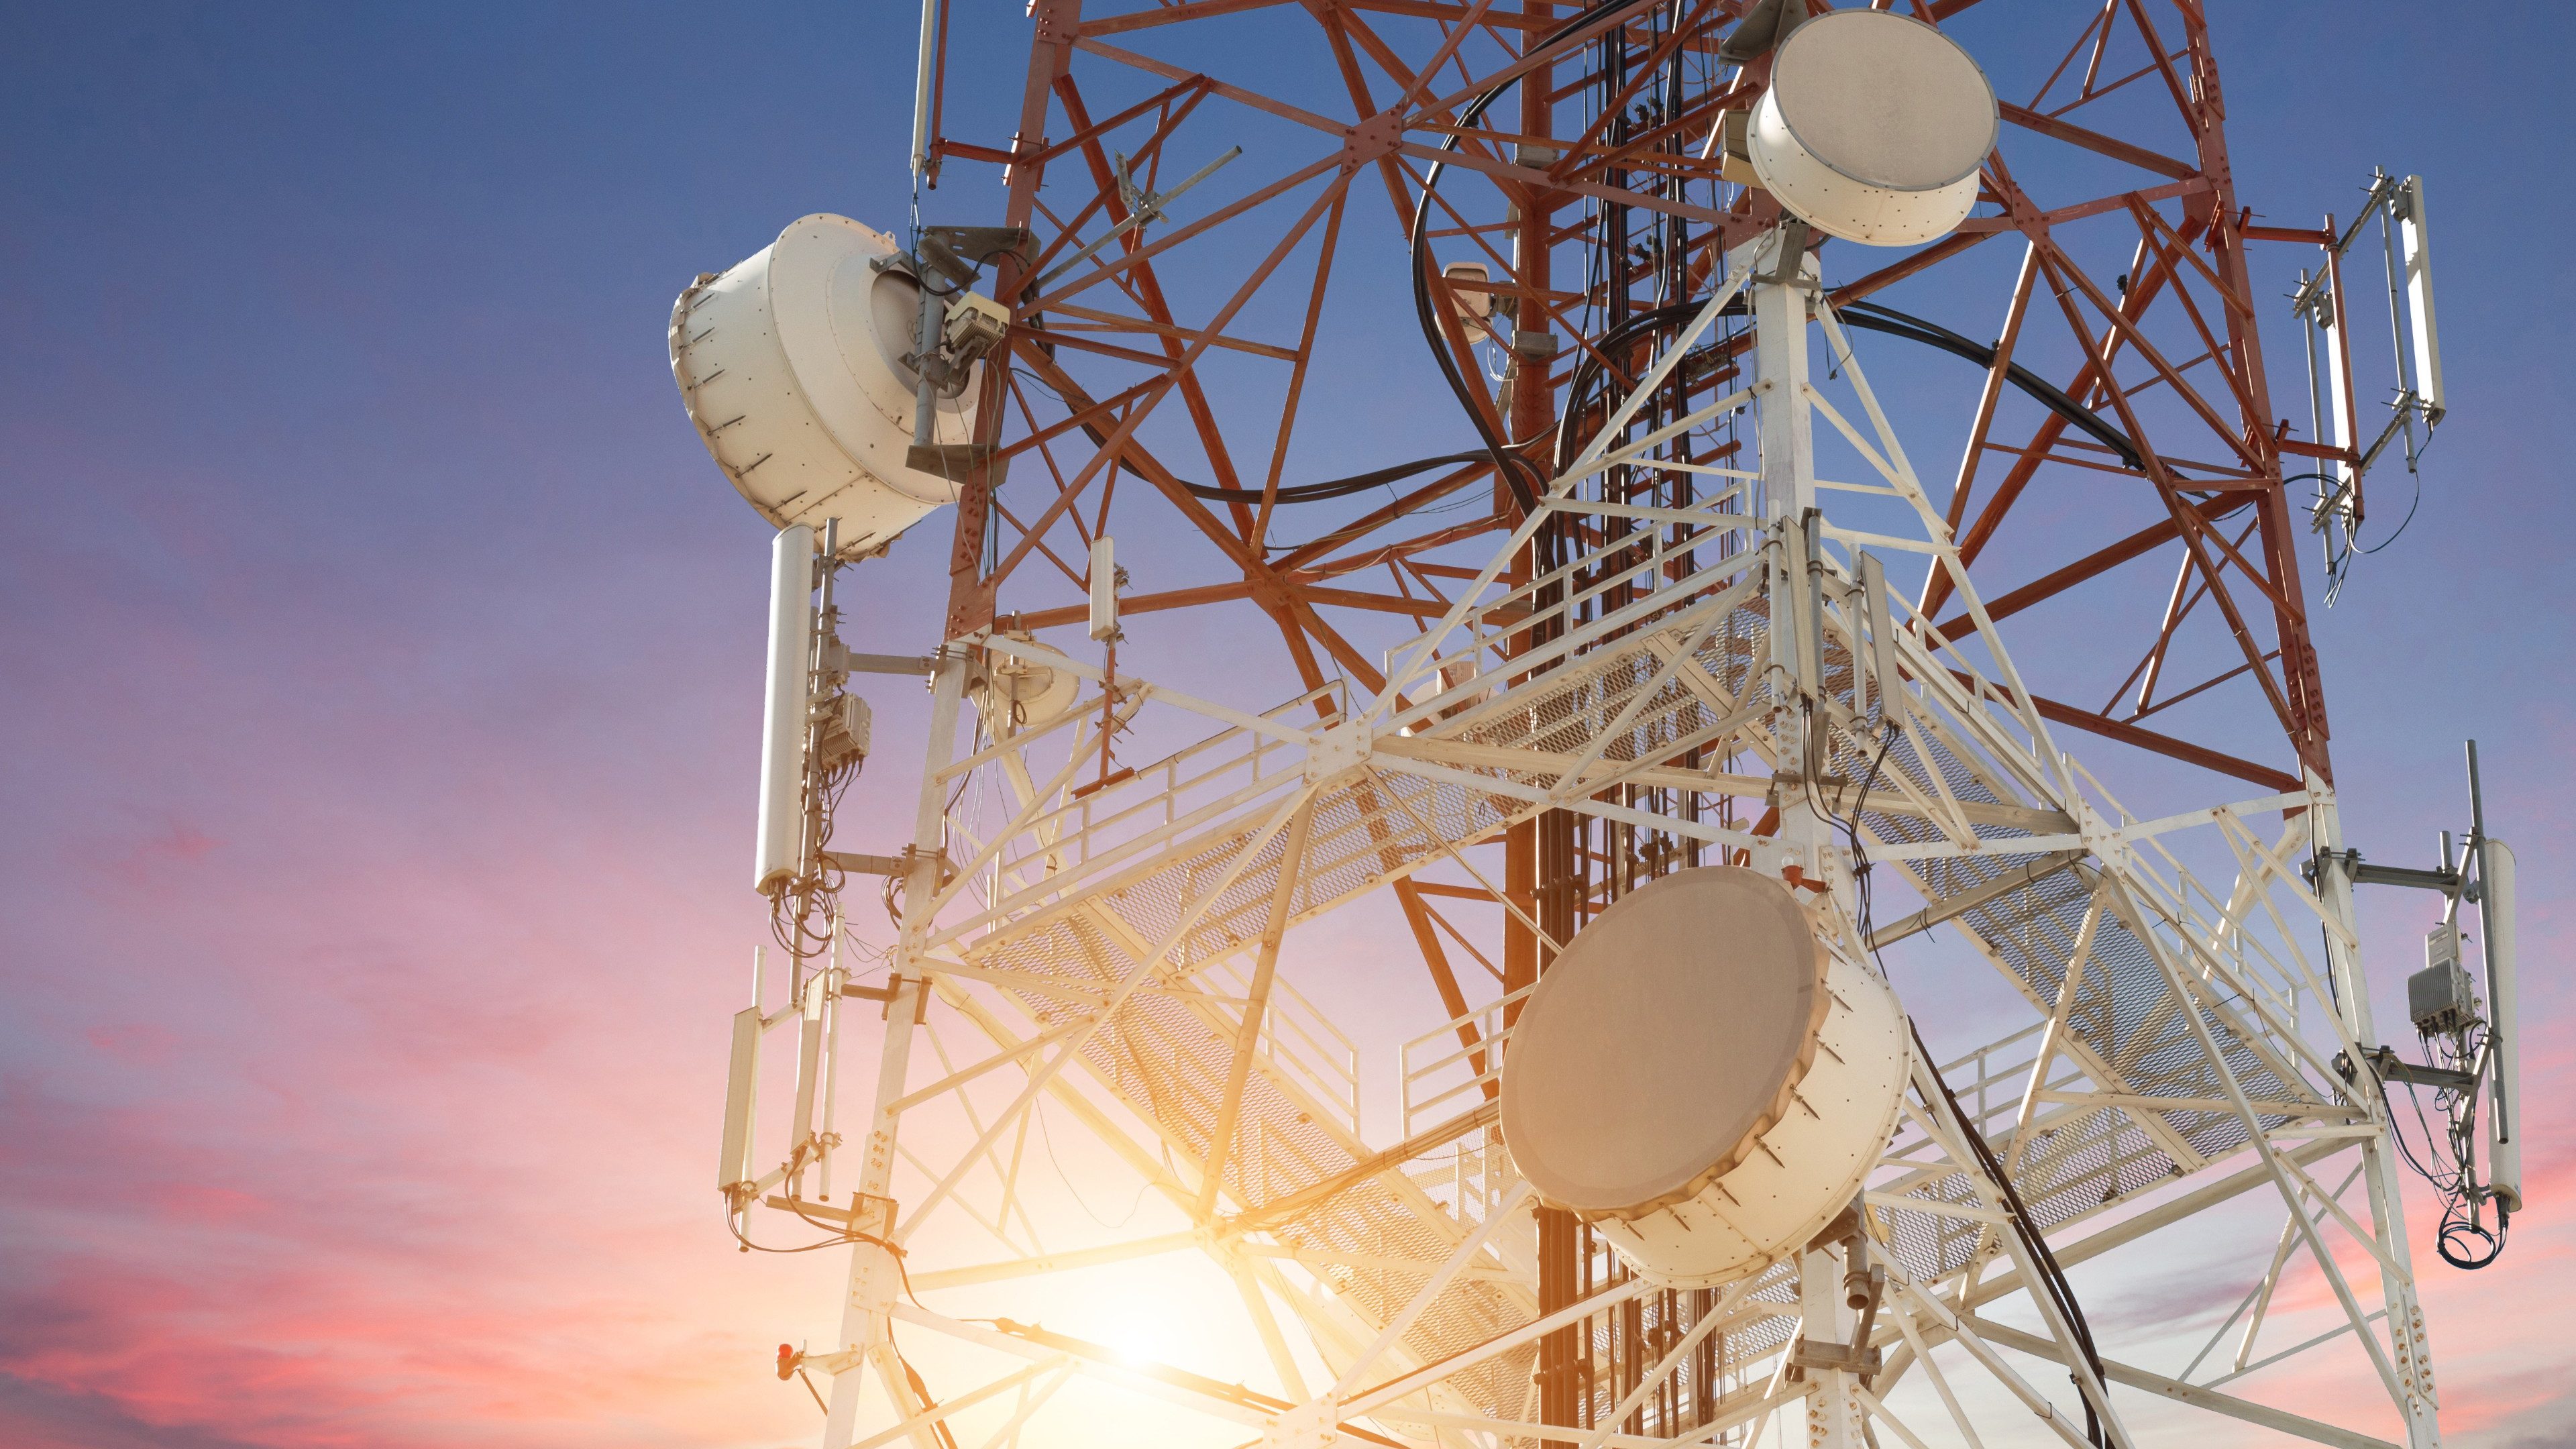 Satellite dish telecom tower at sunset